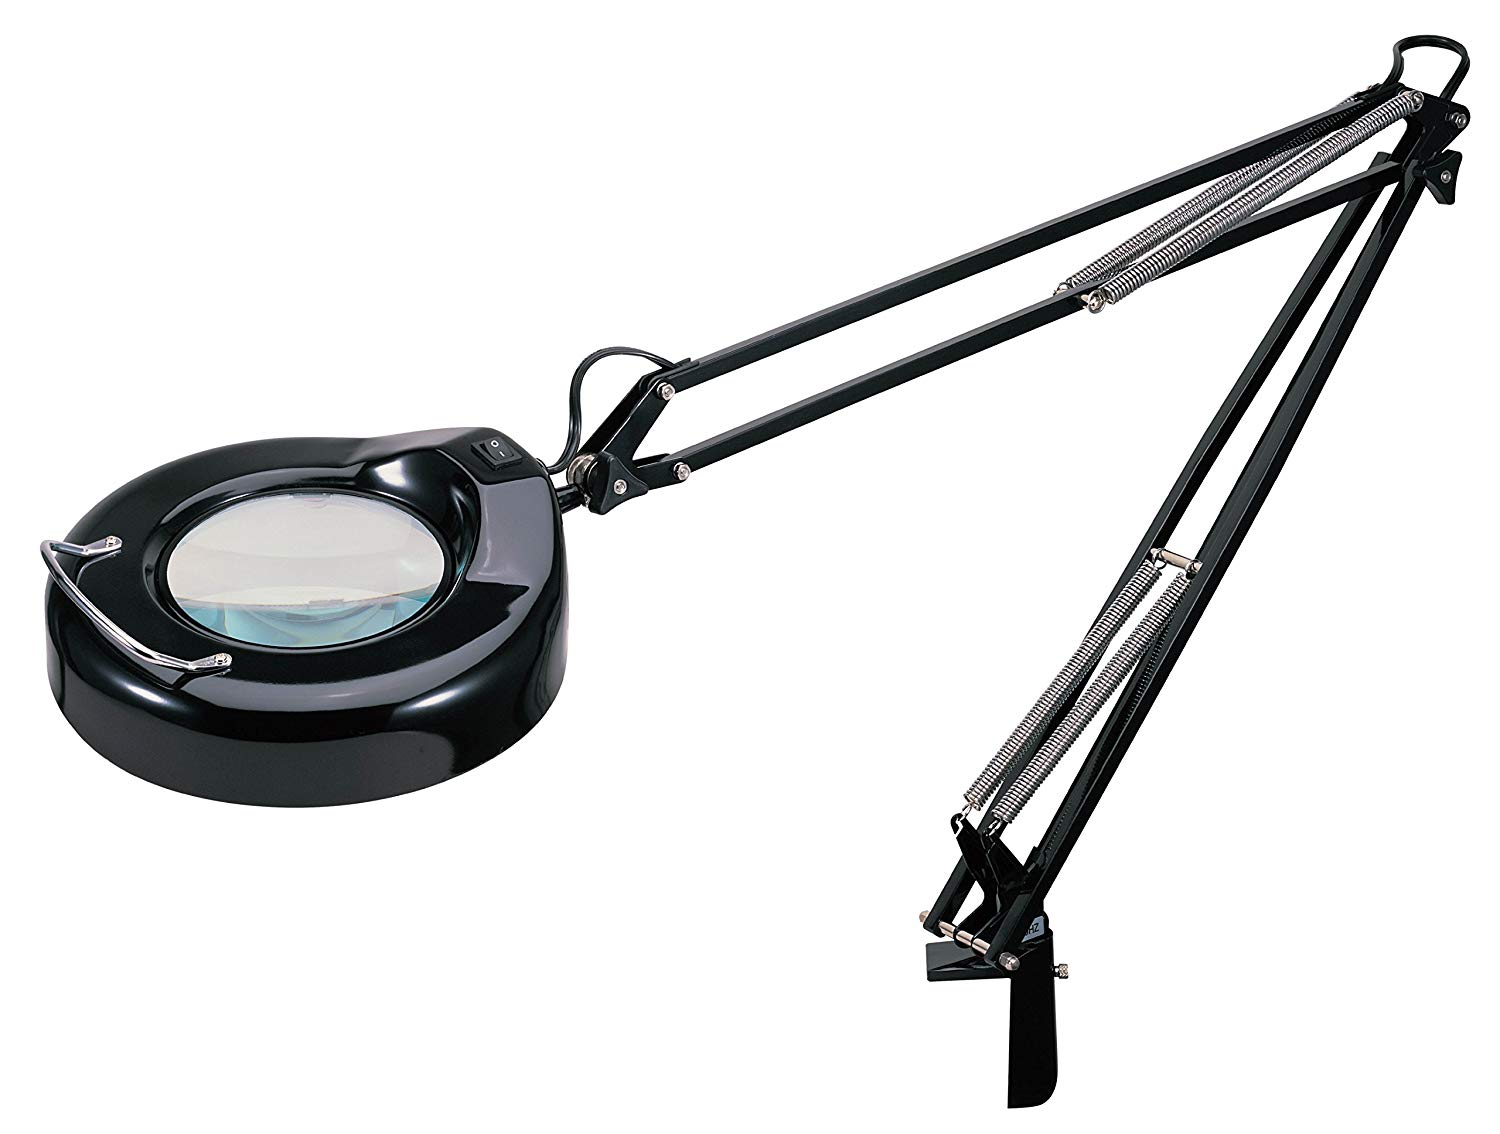 Magnifying lamp amazon.com: V-Light full spectrum daylight effect Heavy-Duty magnifying lamp with EKDZOXK